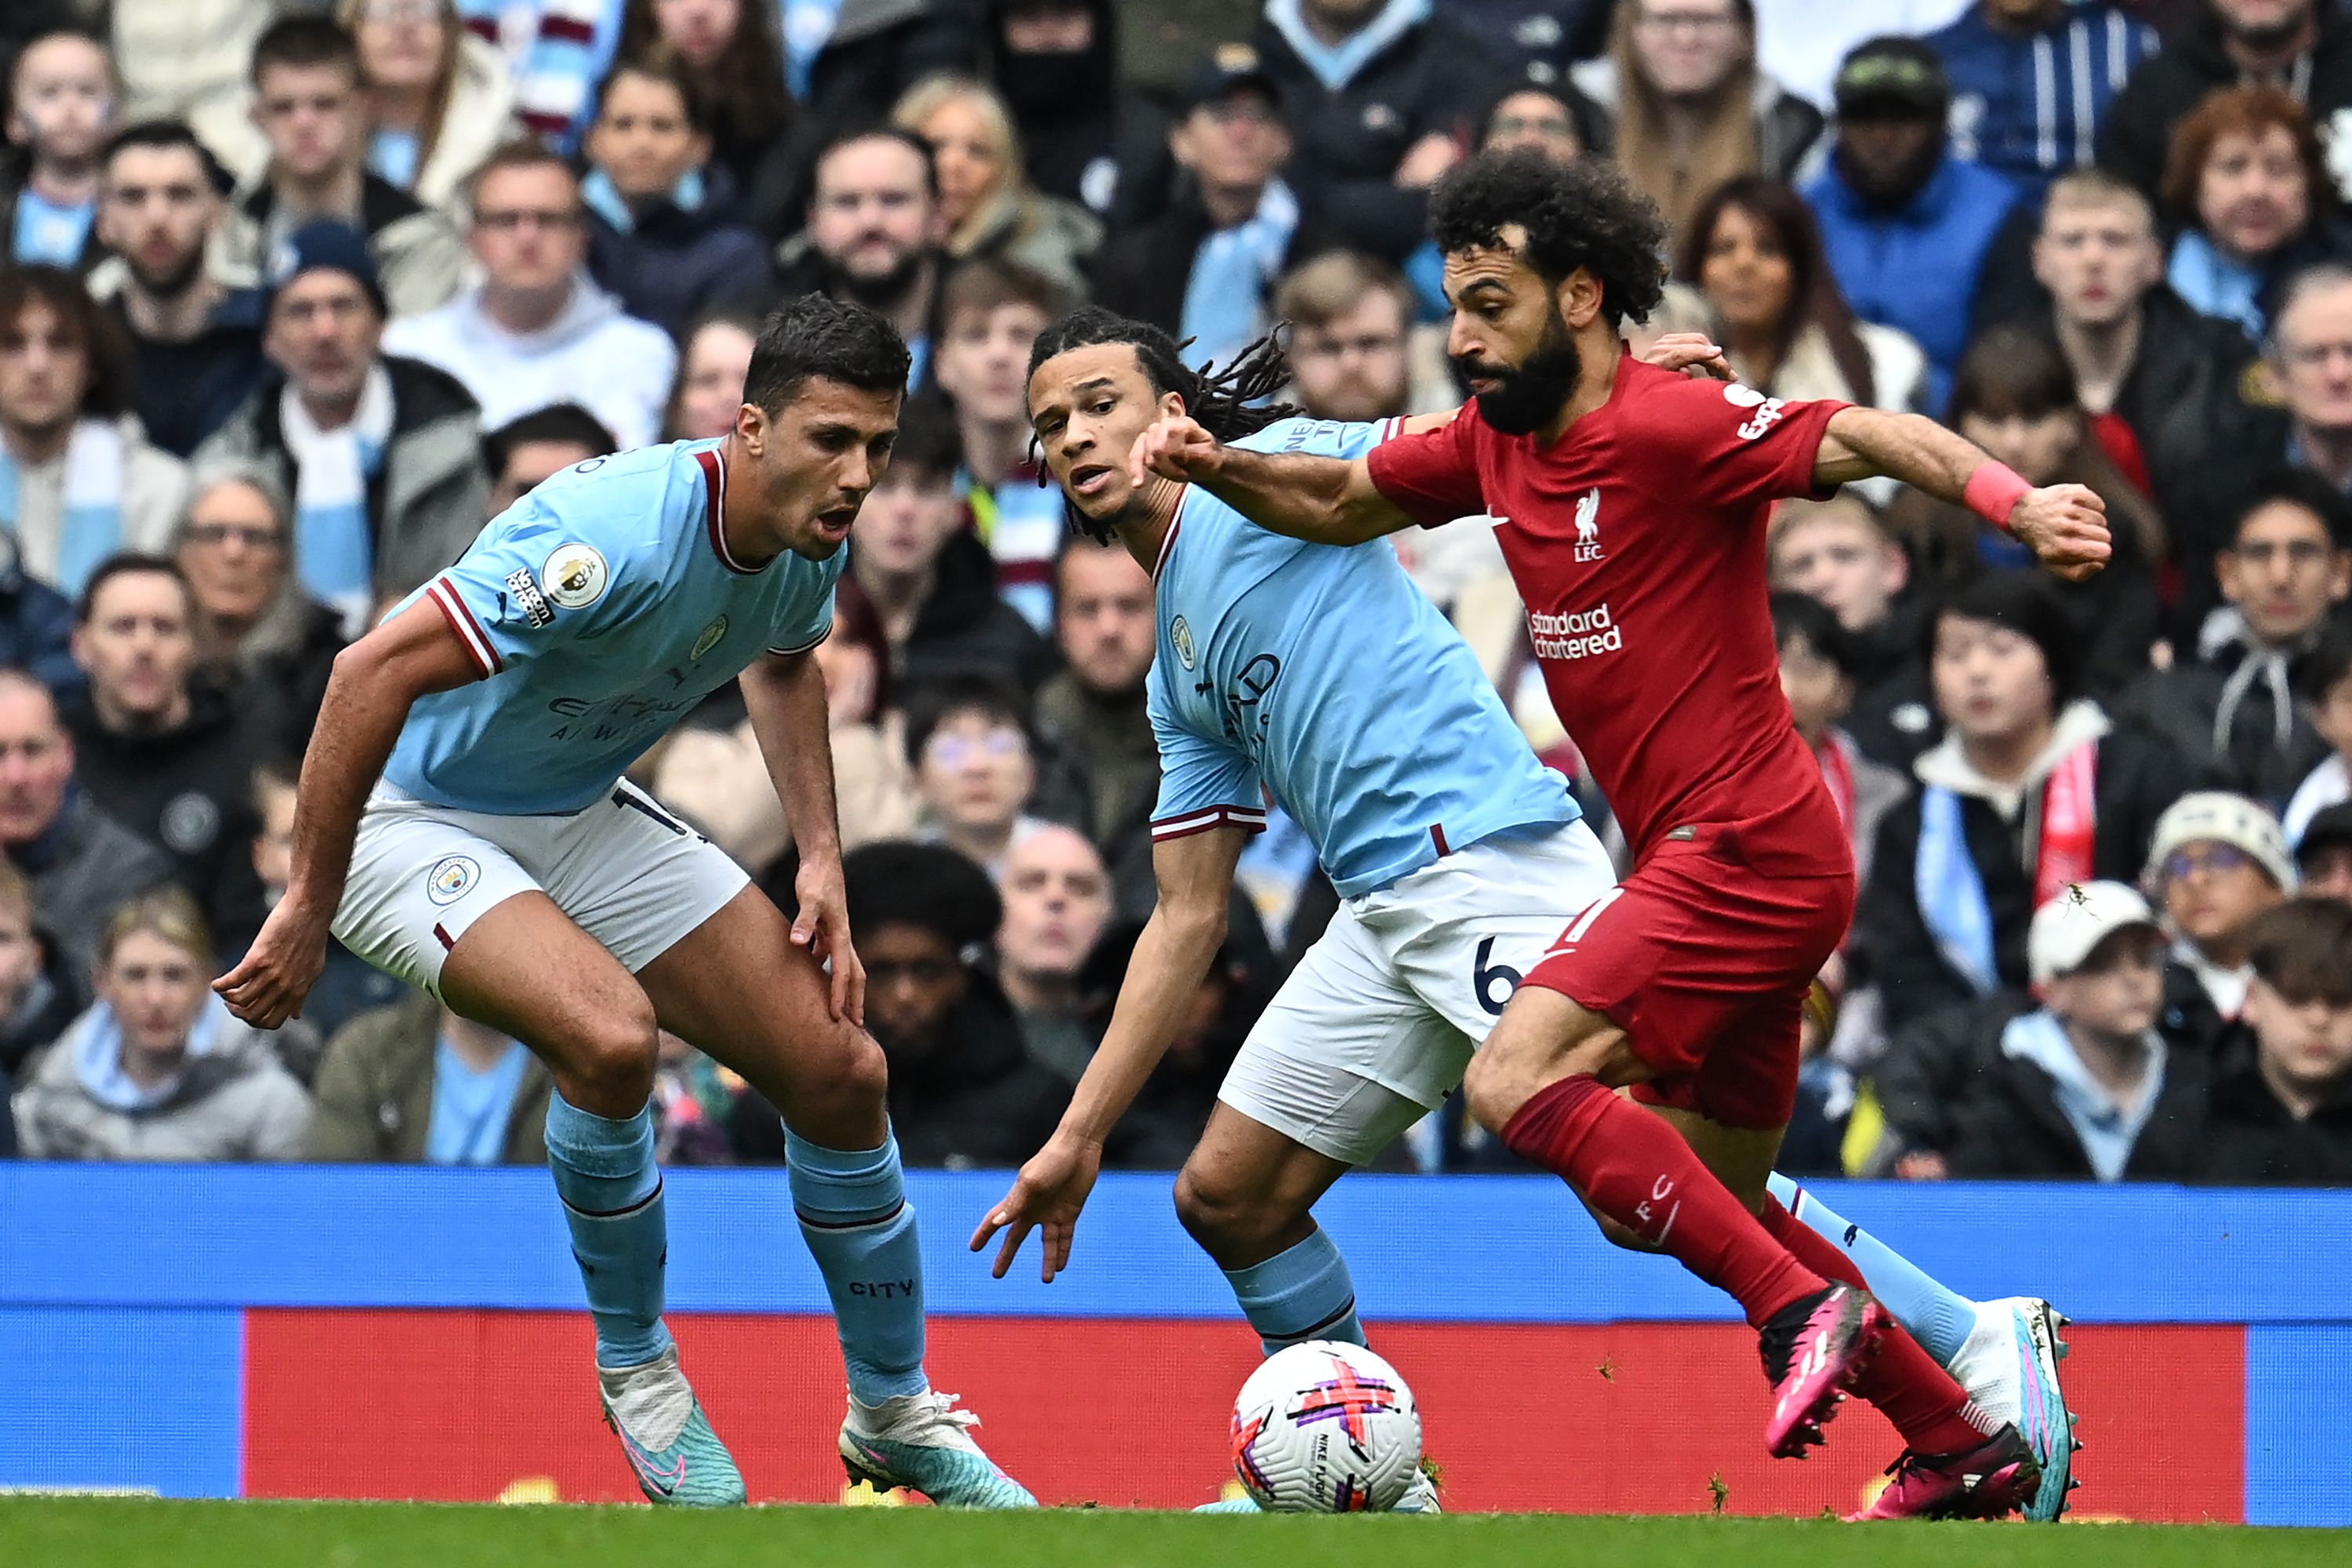 Man City v Liverpool ratings Grealish 9, De Bruyne 9; Salah 7, Jota 6